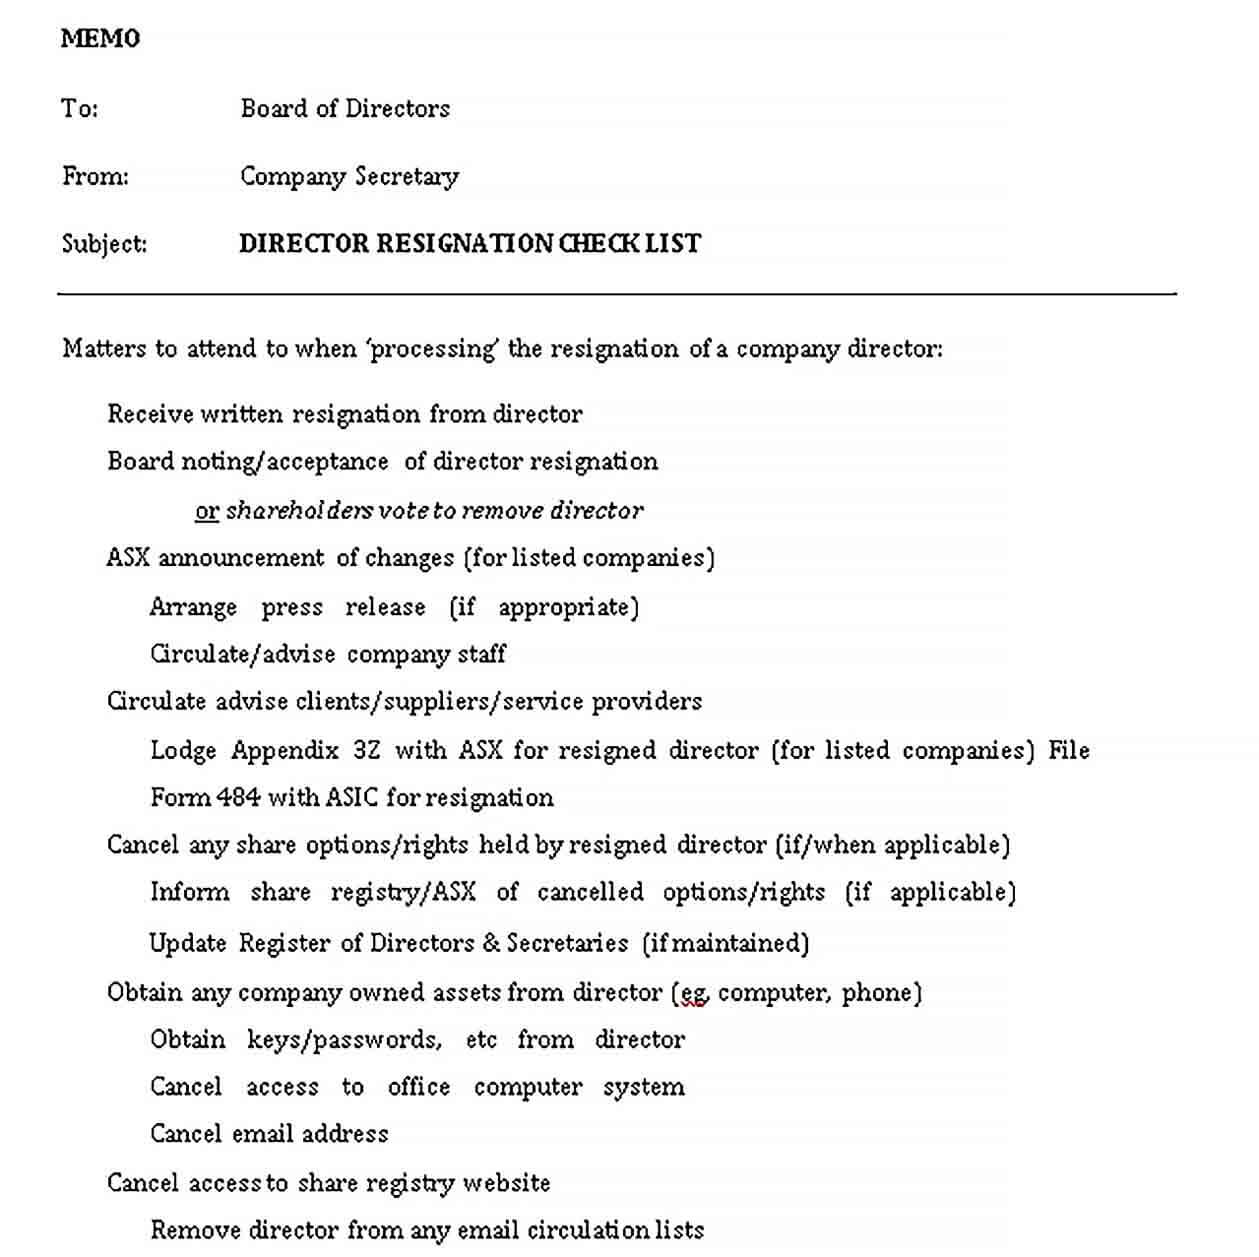 Sample Director Resignation Checklist Template